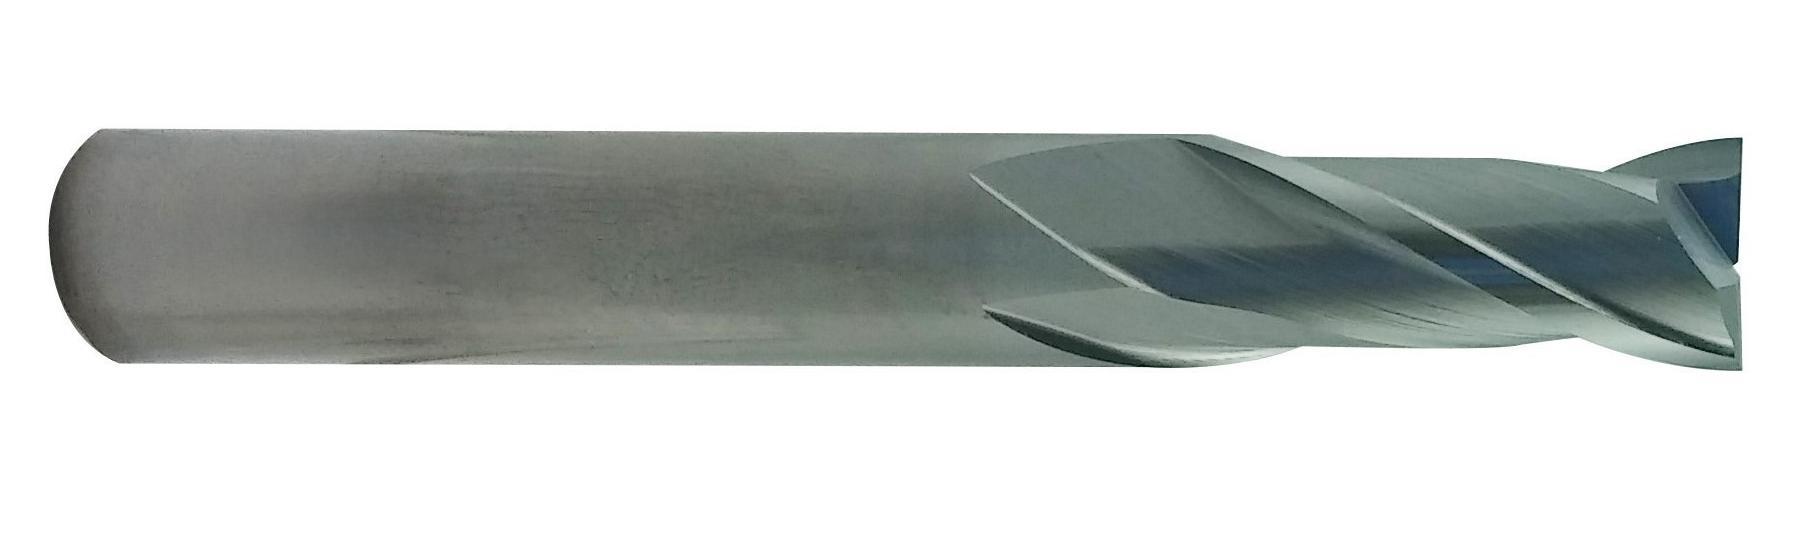 Alfa Tools DEC66805 1/8 x 1/8 2 Flute Double End Center Cutting Carbide End Mill